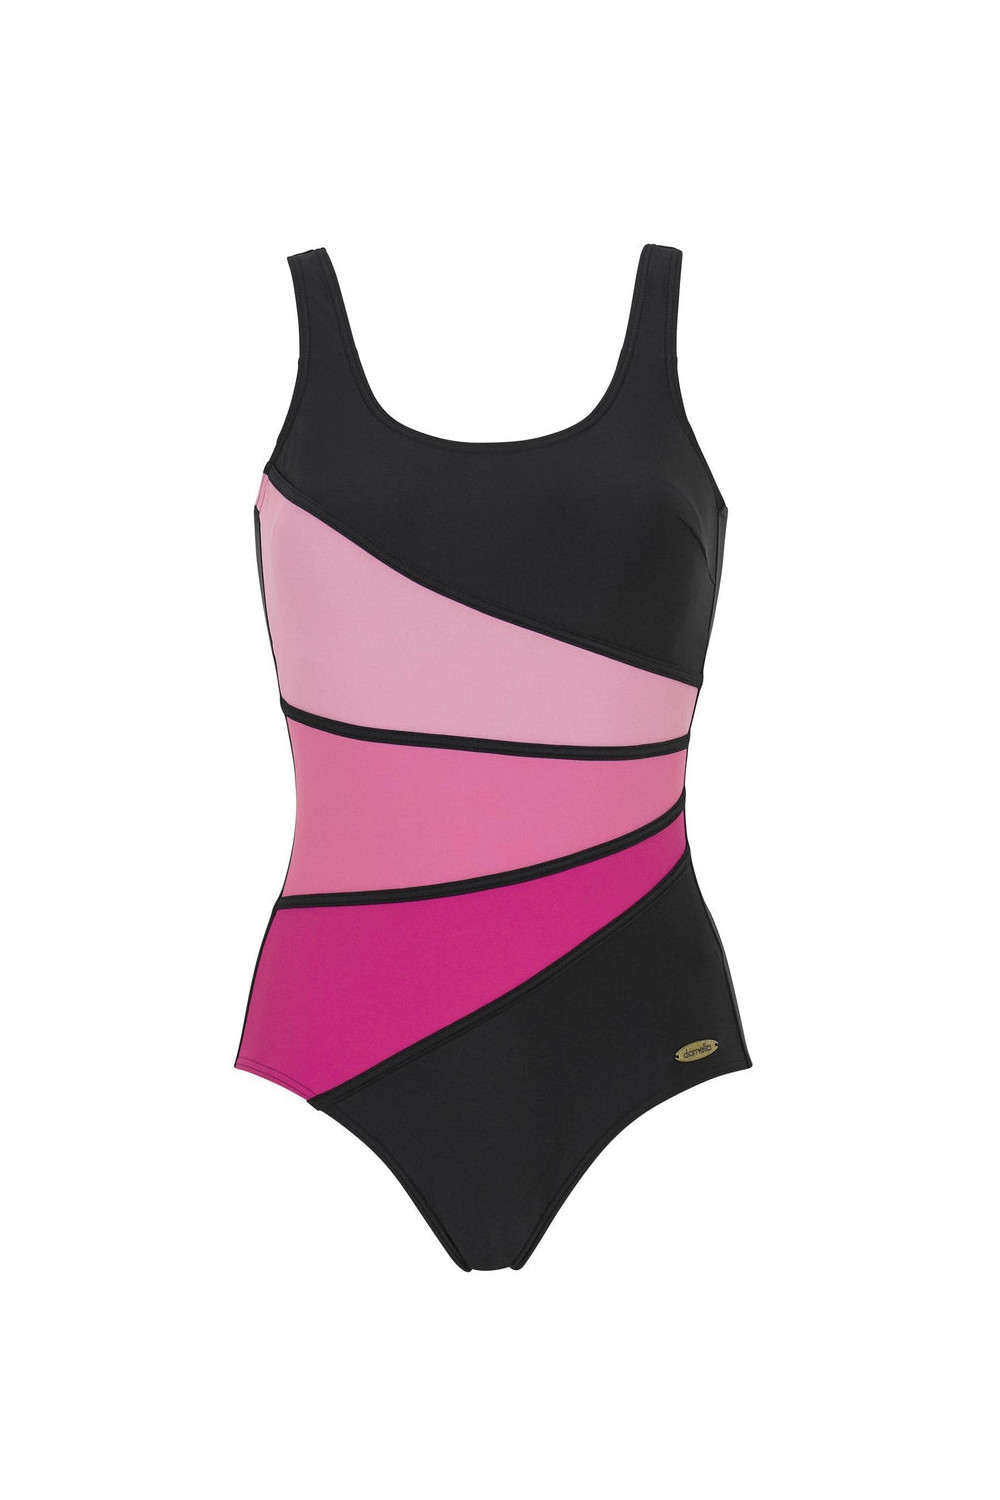 https://aldipa.gr/eshop/10884-superlarge_default/sports-one-piece-swimsuit-1785.jpg